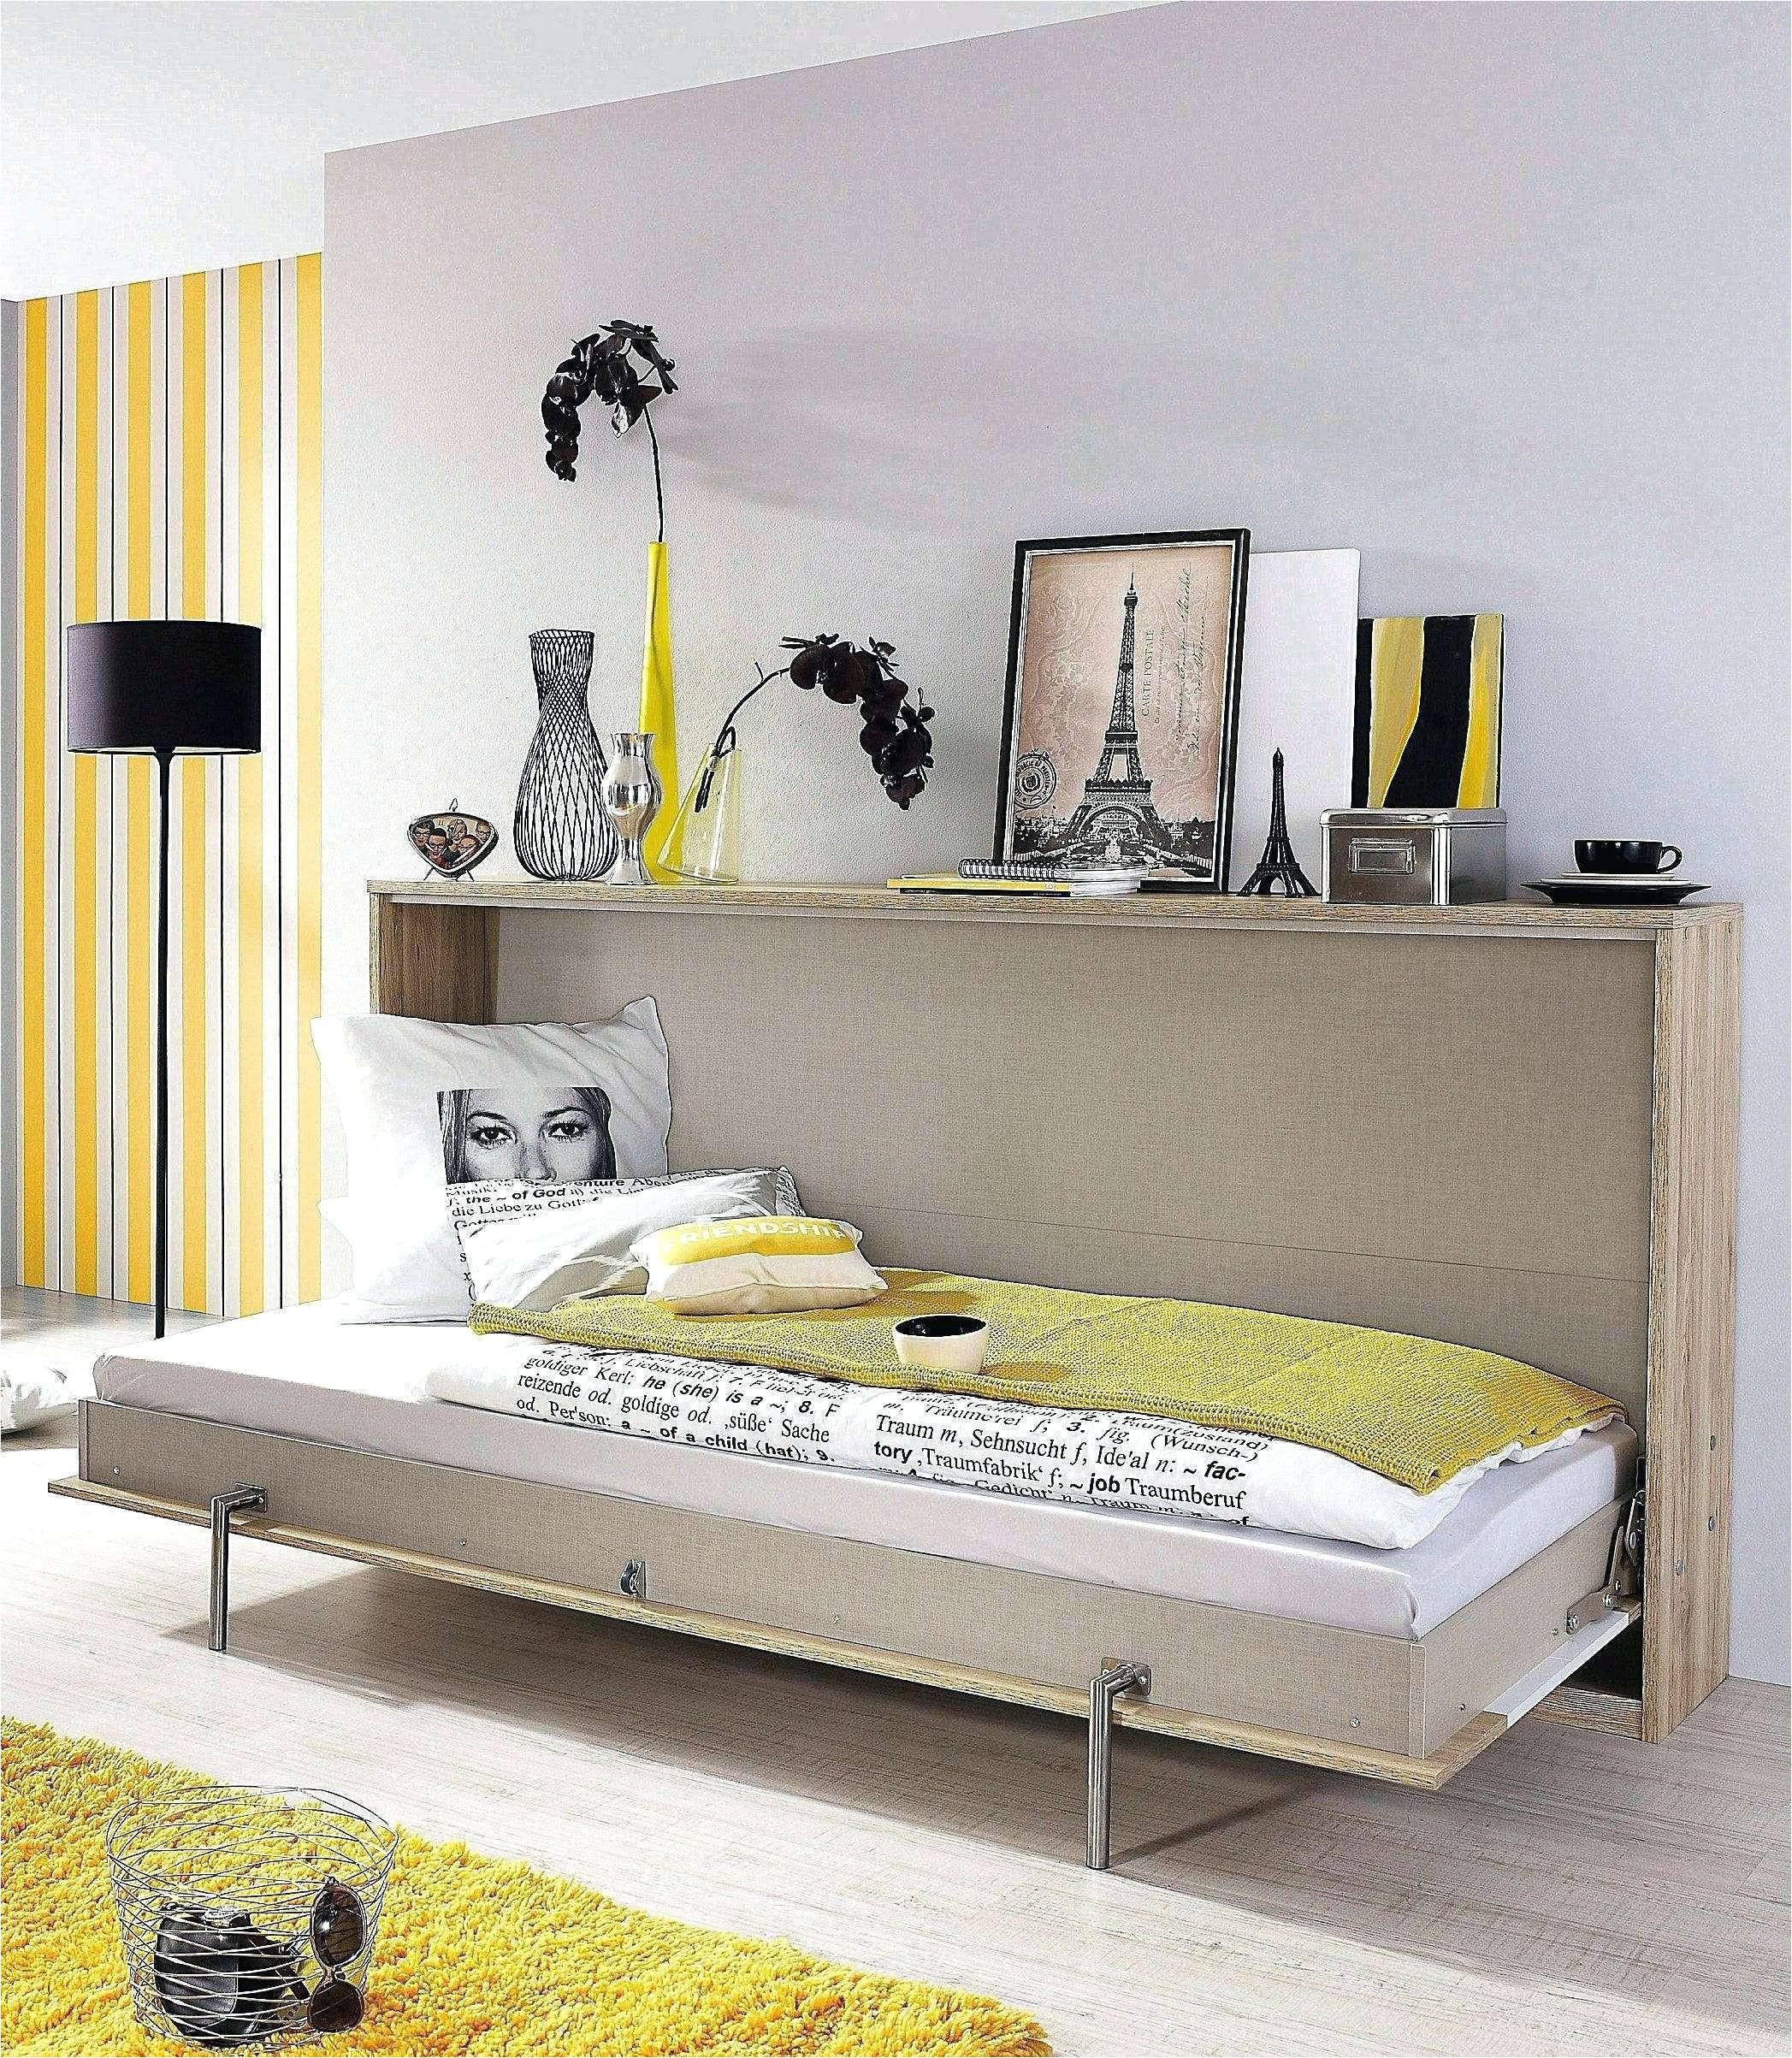 Ikea Malm Bed Frame with Storage Review tolle 35 Von Ikea Hemnes Bett Anleitung Beste Mobelideen